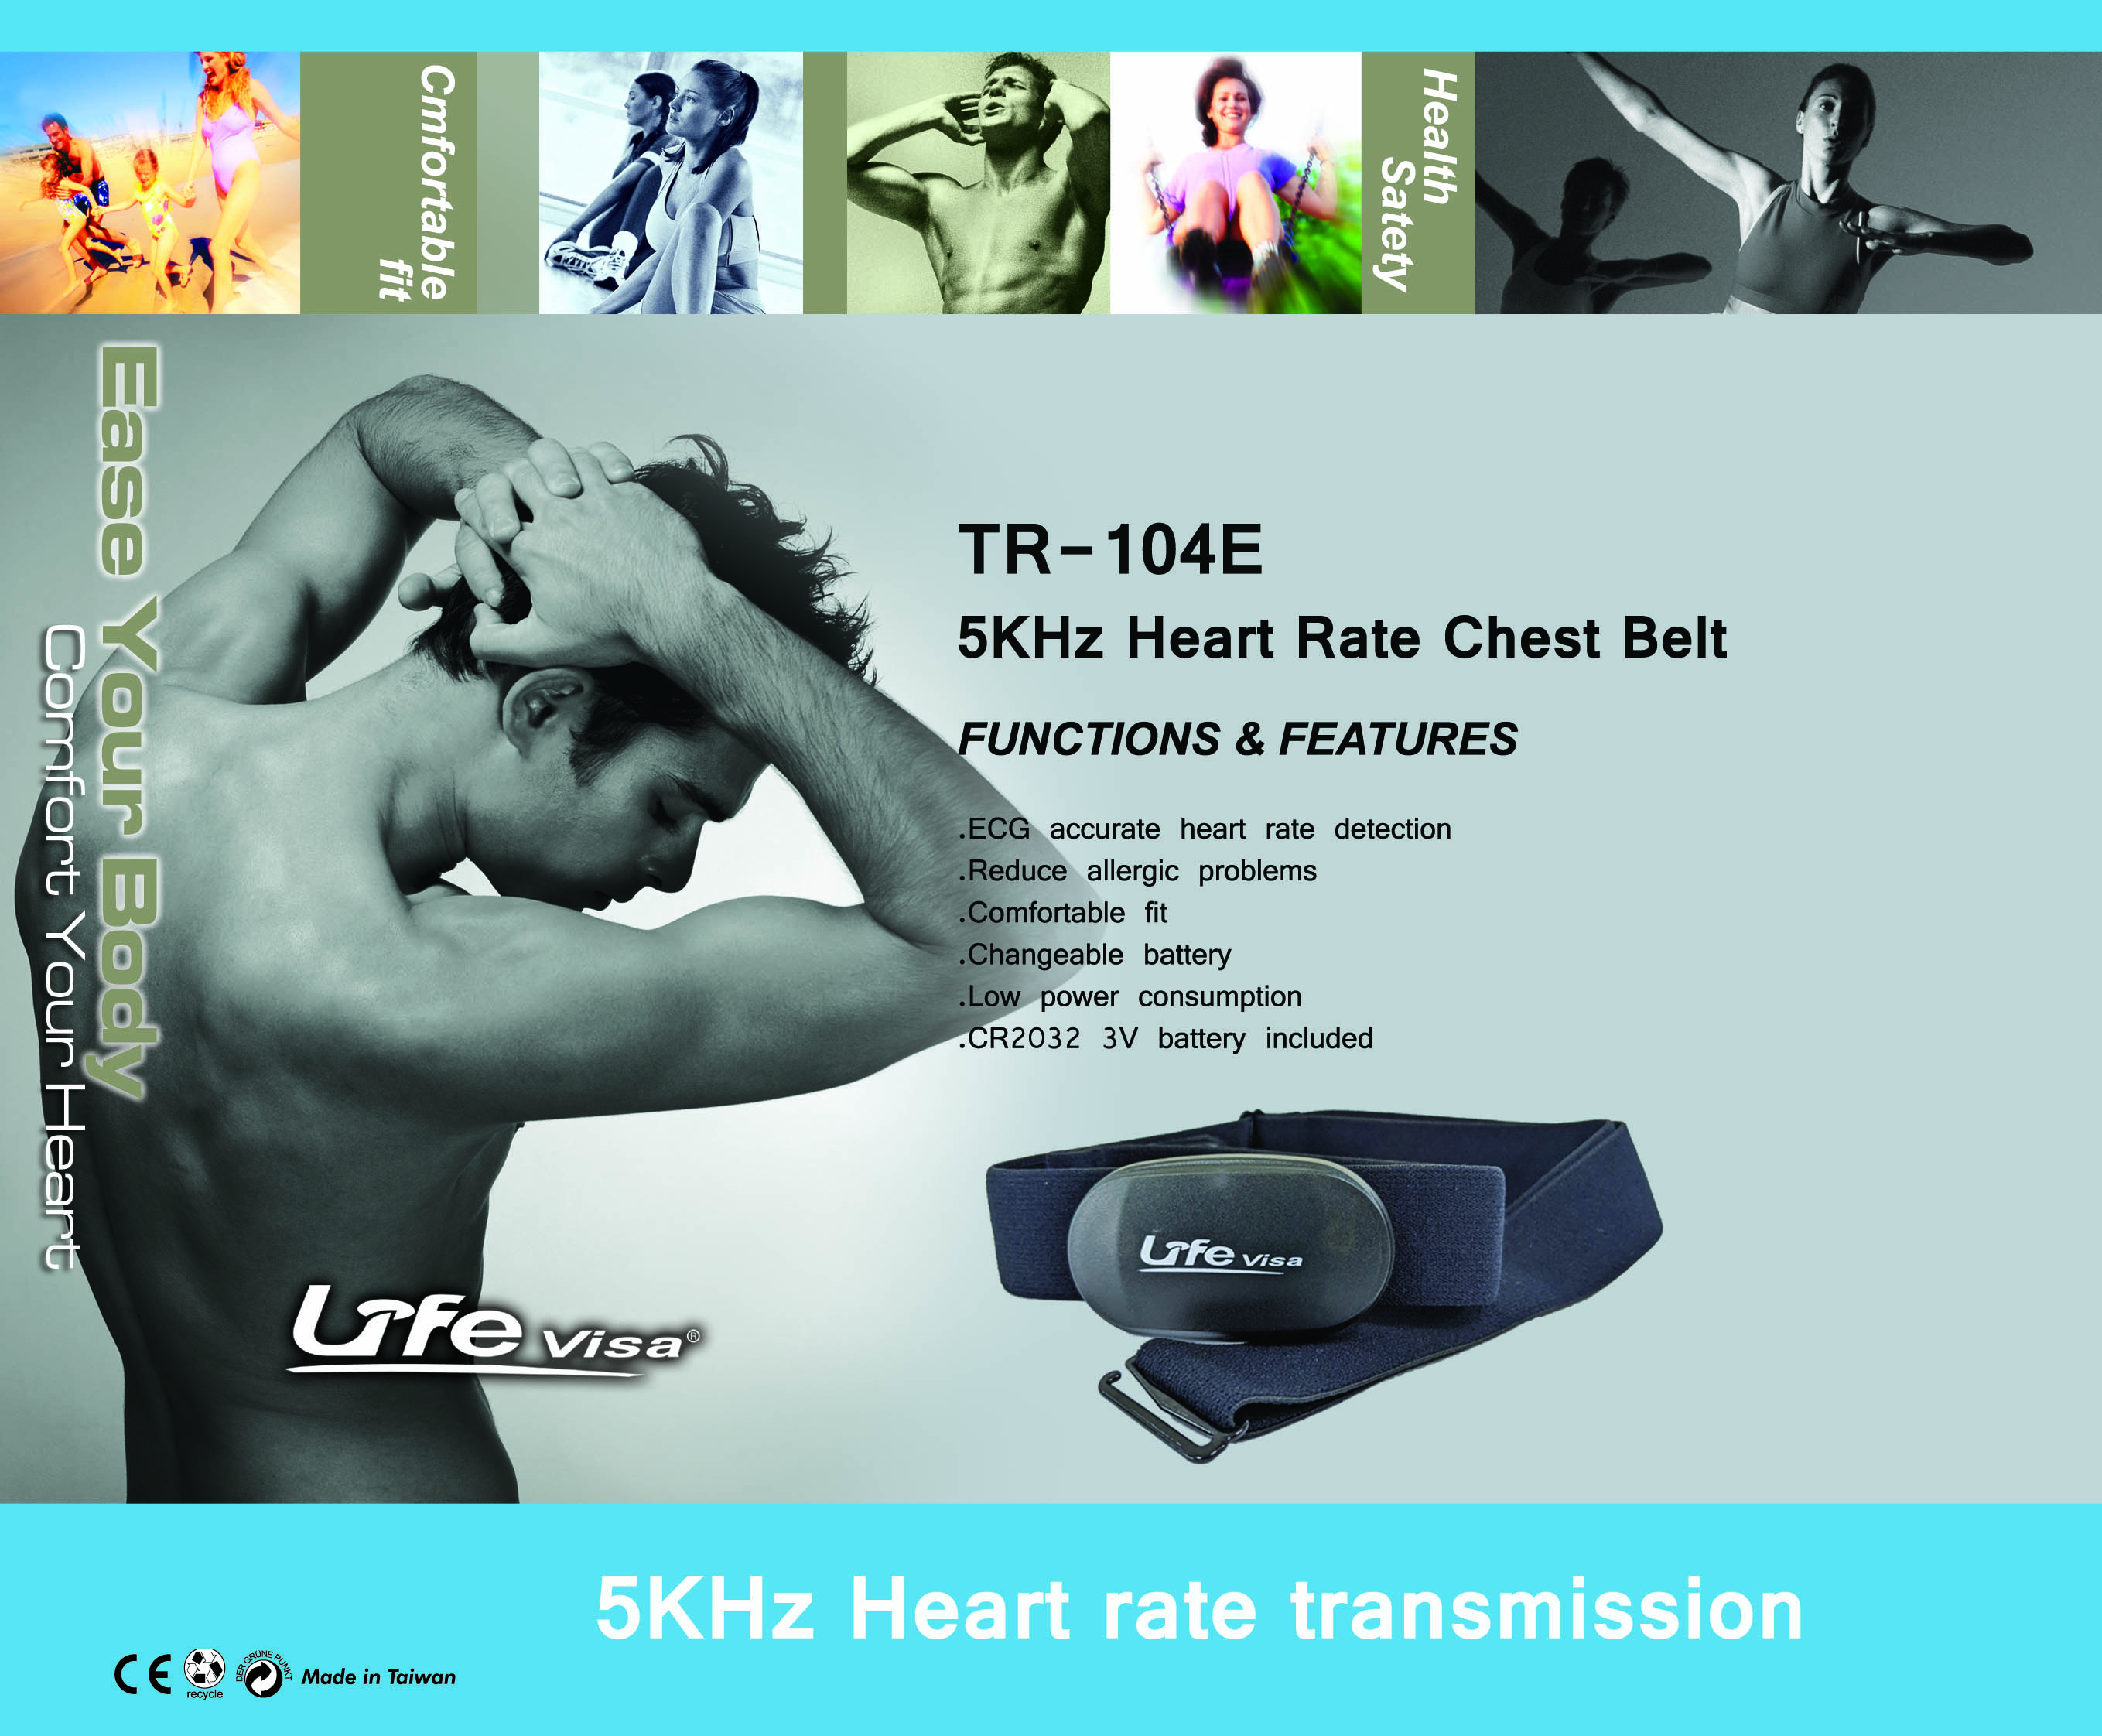 Lifevisa,lifevisa,Taiwan Biotronic,5.3Khz heart rate monitor,5Khz heart rate monitor,heart rate monitor,5khz heart rate belt,5.3khz heart rate belt,5.3KHz Heart rate chest belt,5KHz Heart rate monitor心跳帶，心率帶